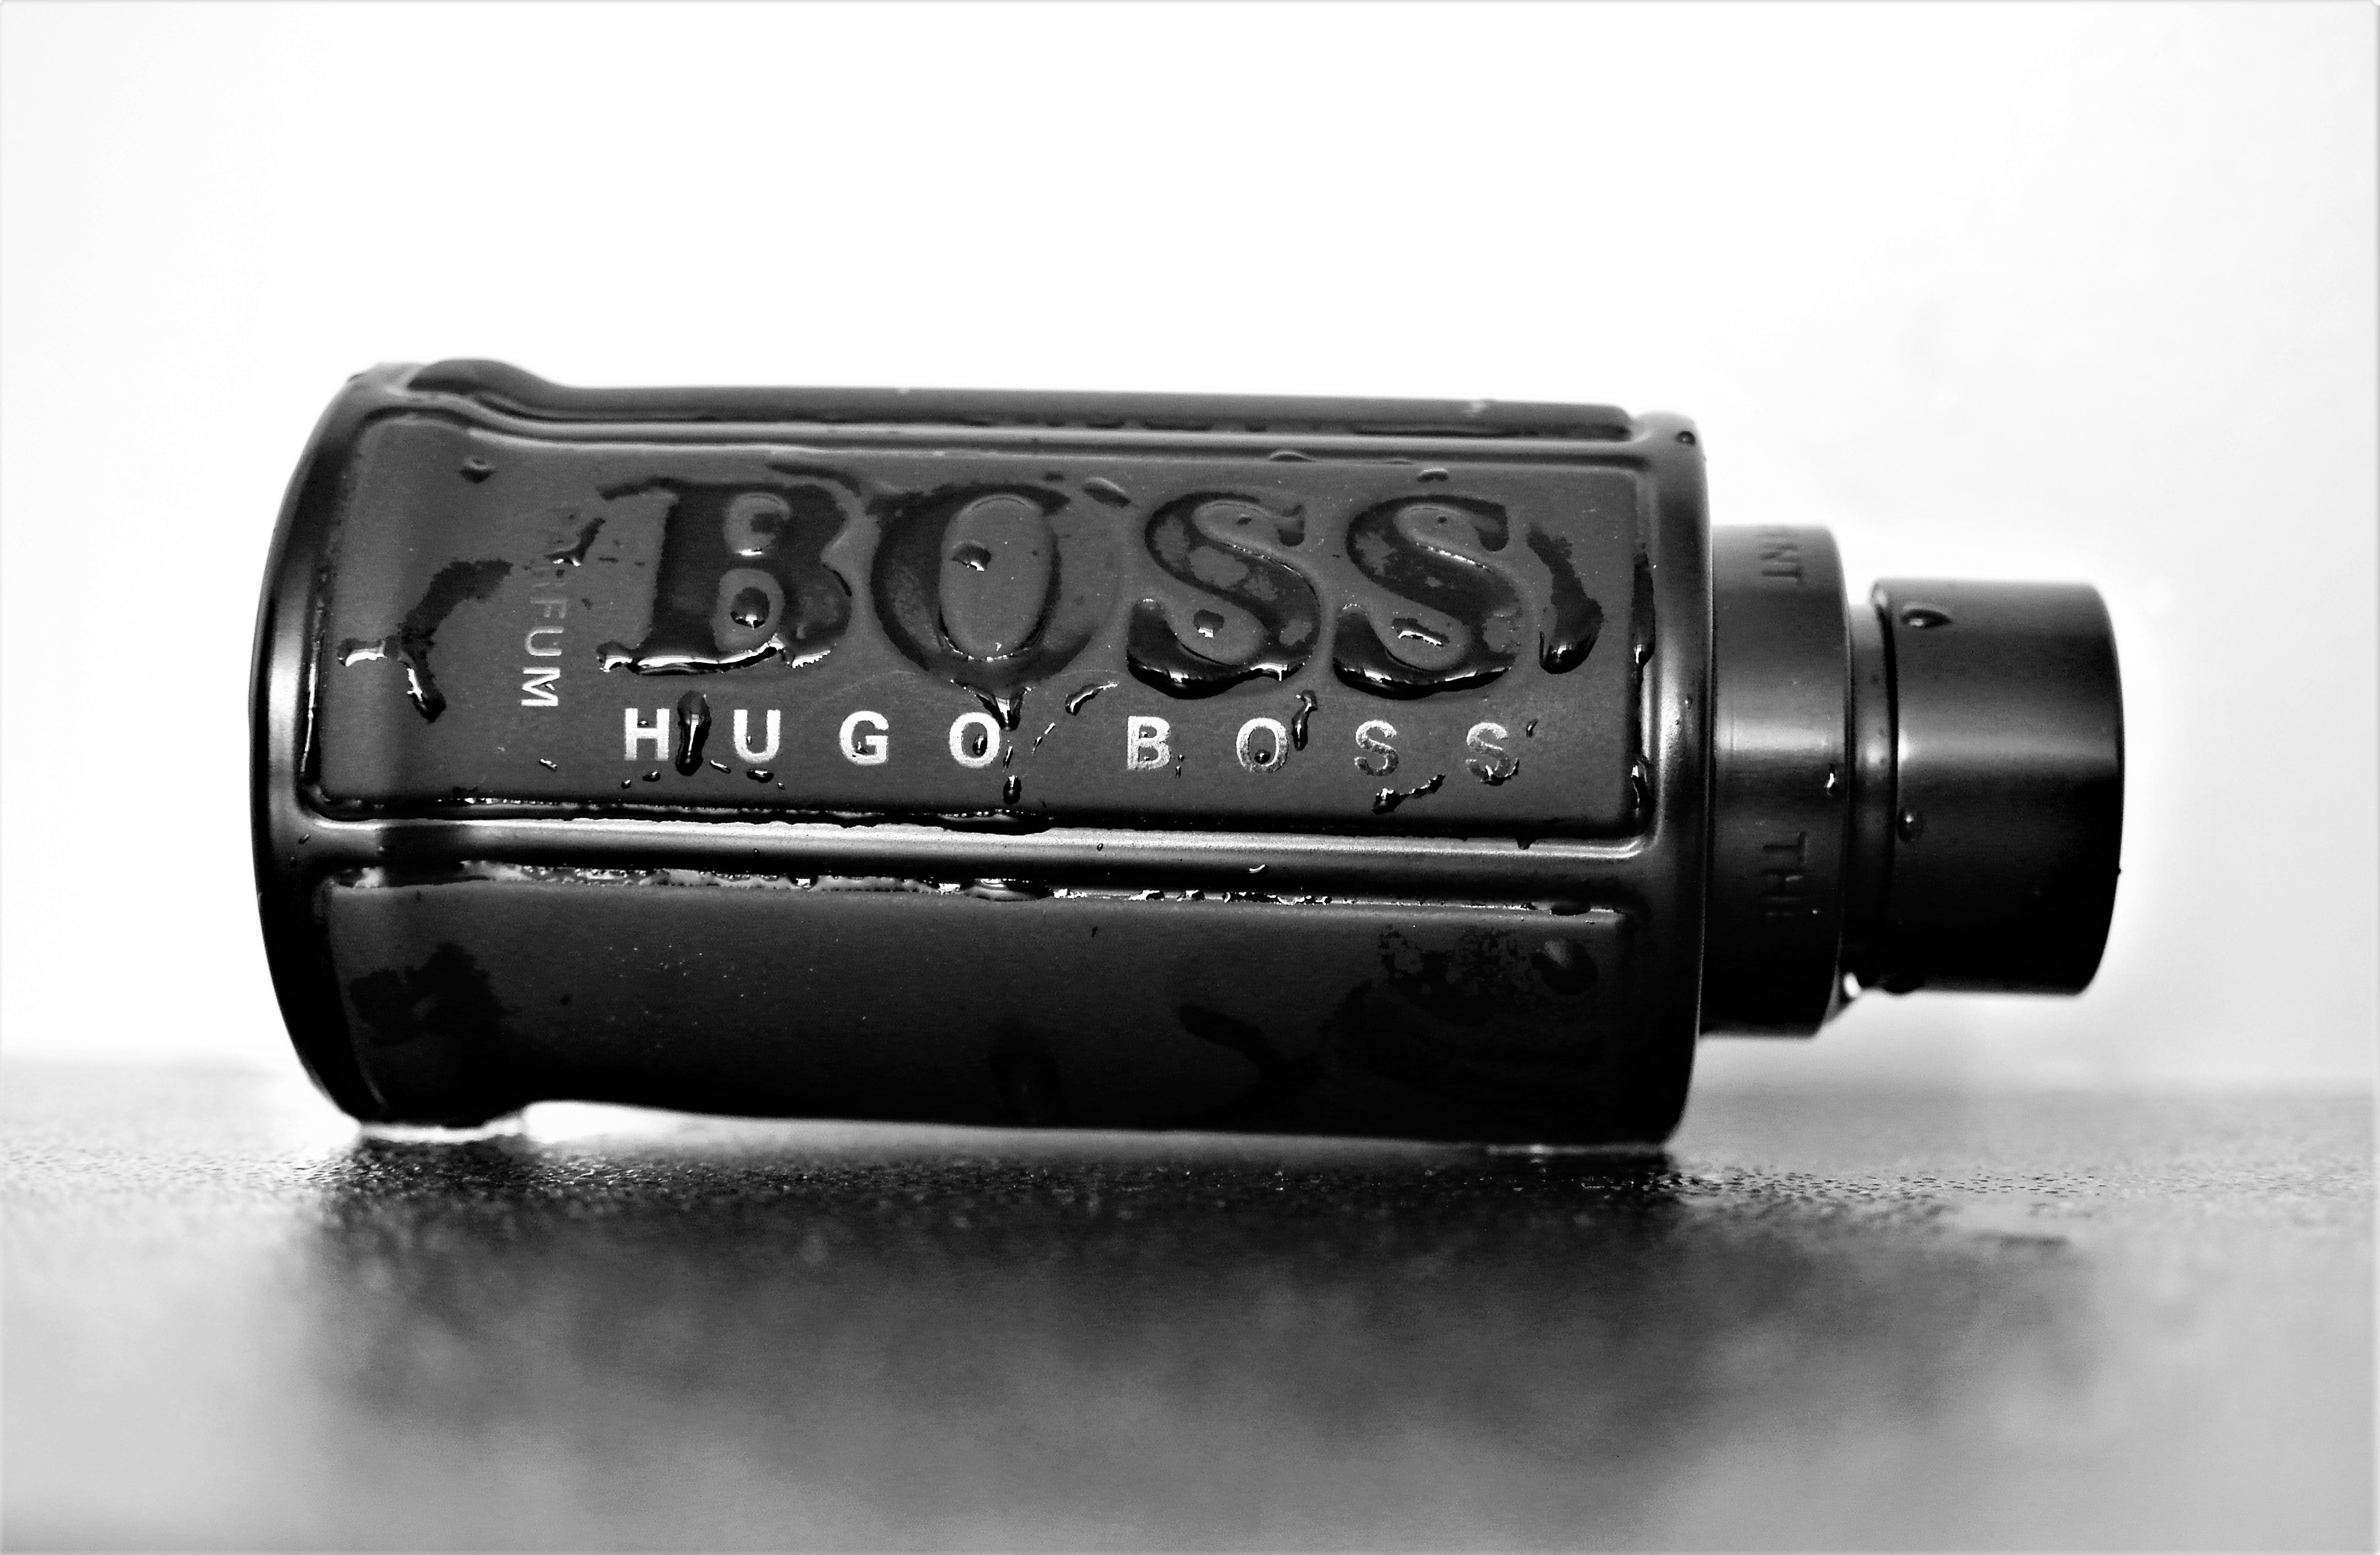 hugo boss the scent parfum edition